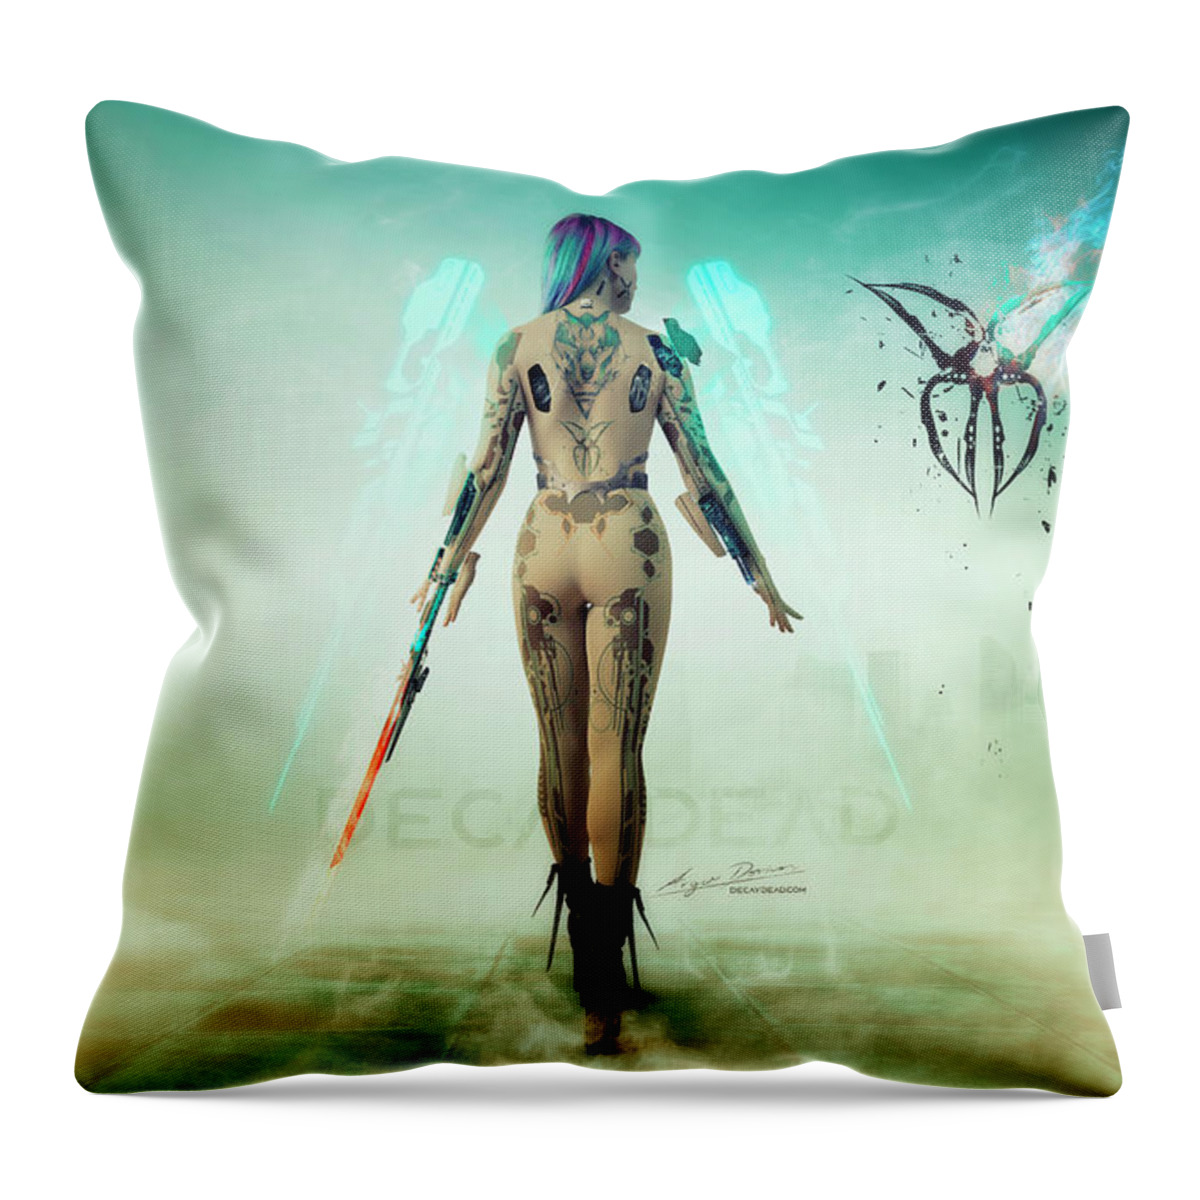 Argus Dorian Throw Pillow featuring the digital art Blue Luna ver2 by Argus Dorian